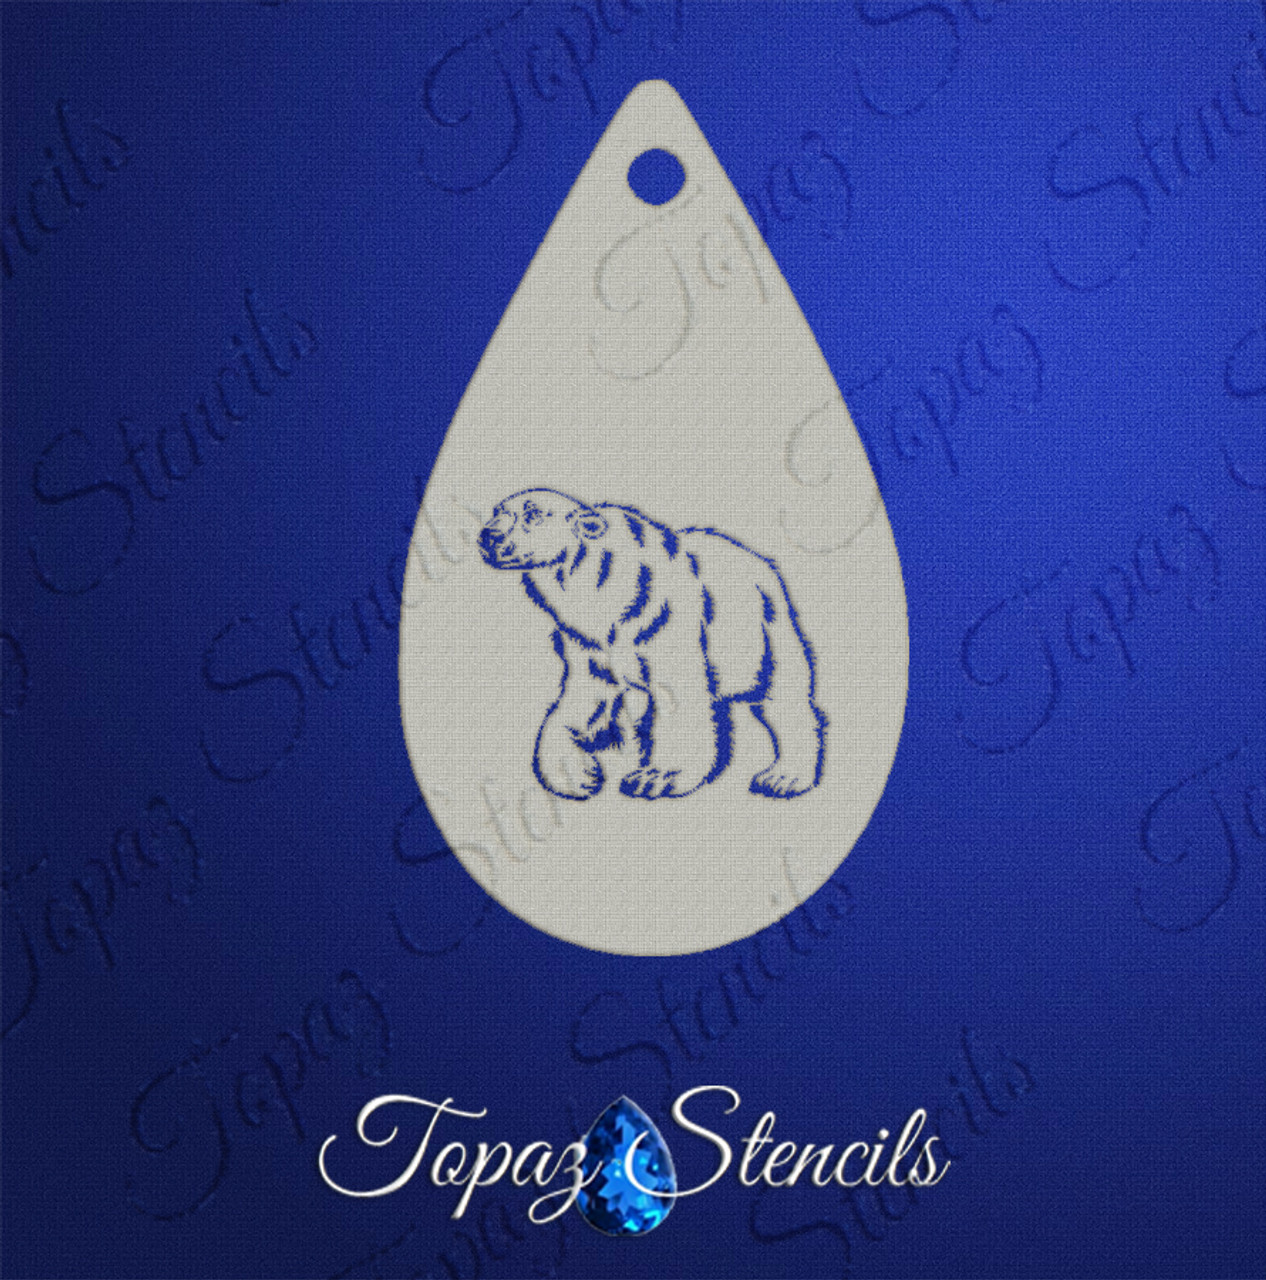 Polar Bear - Topaz Stencils